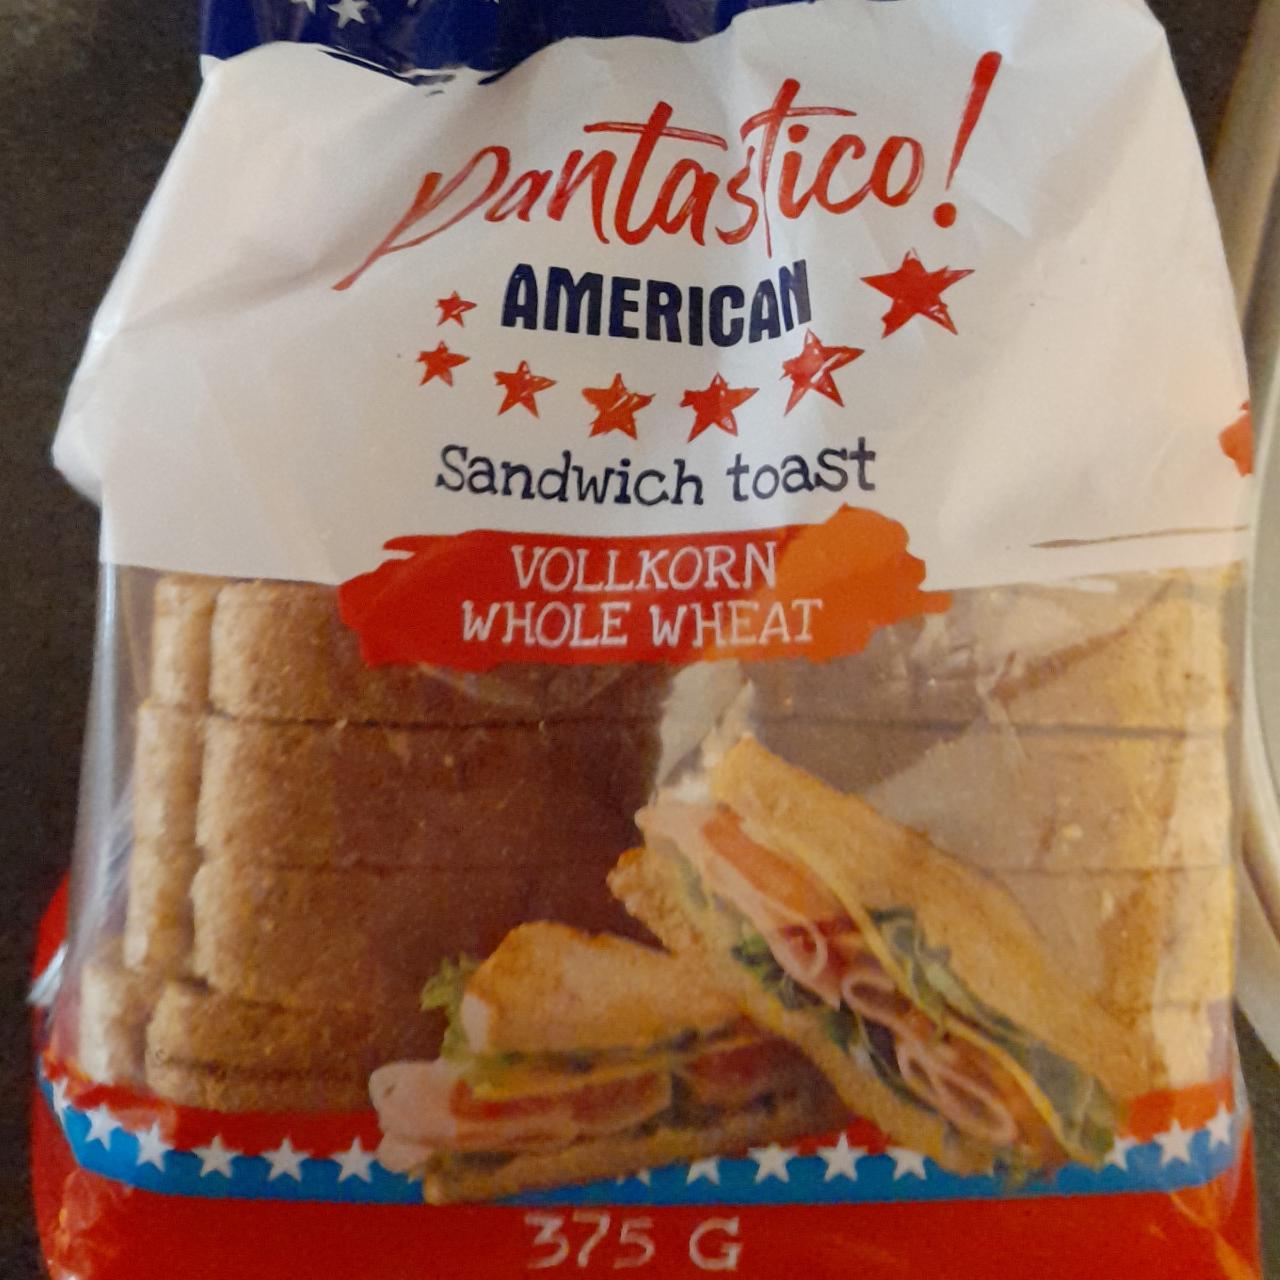 Fotografie - Pantastico! Sandwich toast vollkorn American